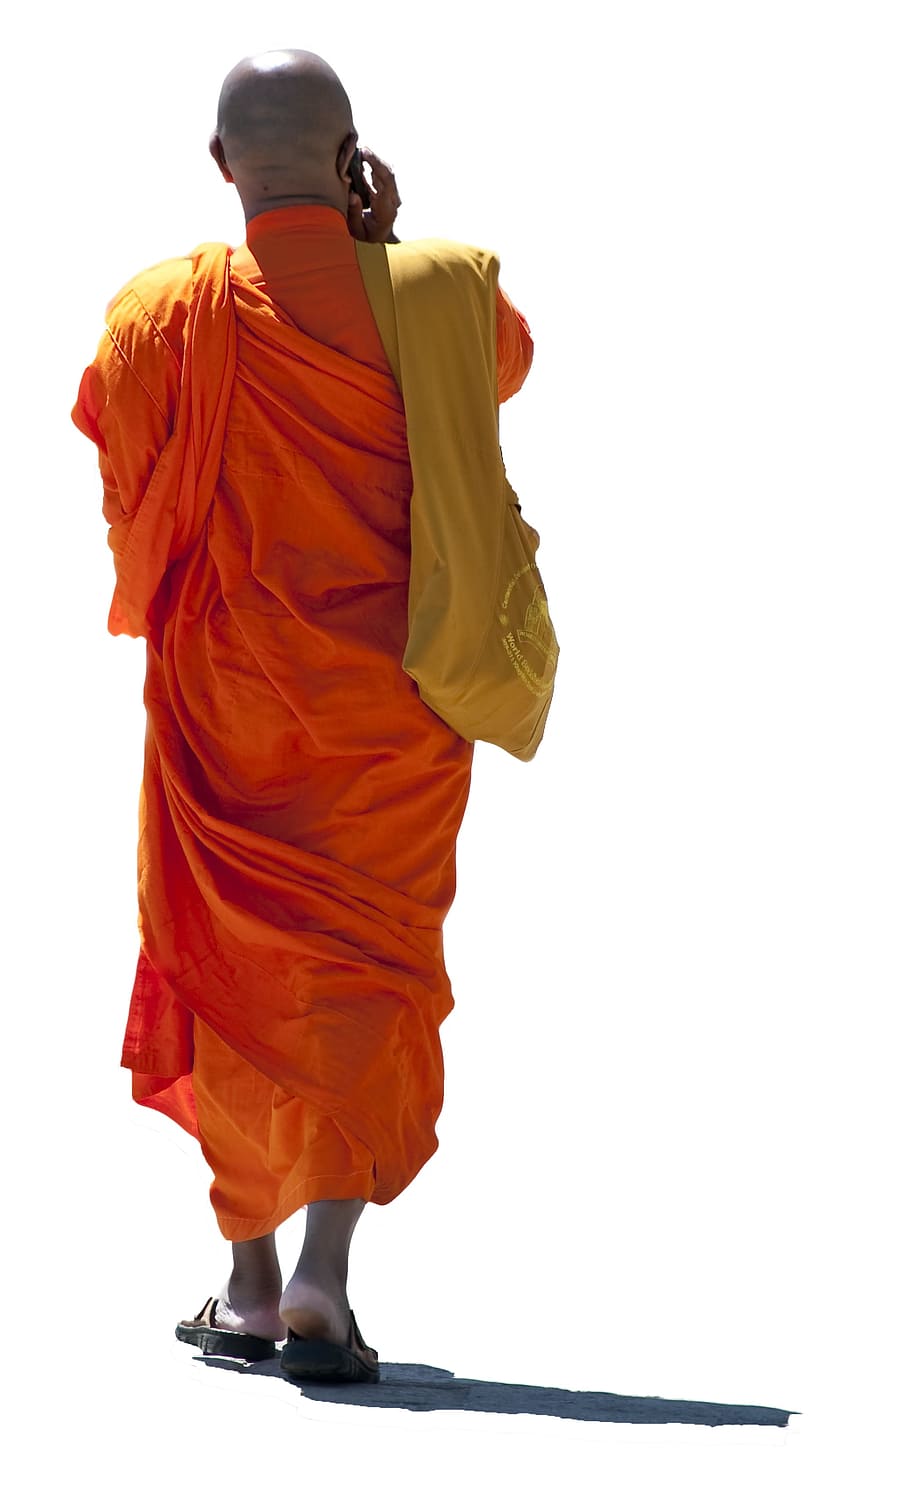 hombre, traje de monje, de pie, cerca, foto, monje, atuendo, de cerca, monje budista, hablar móvil